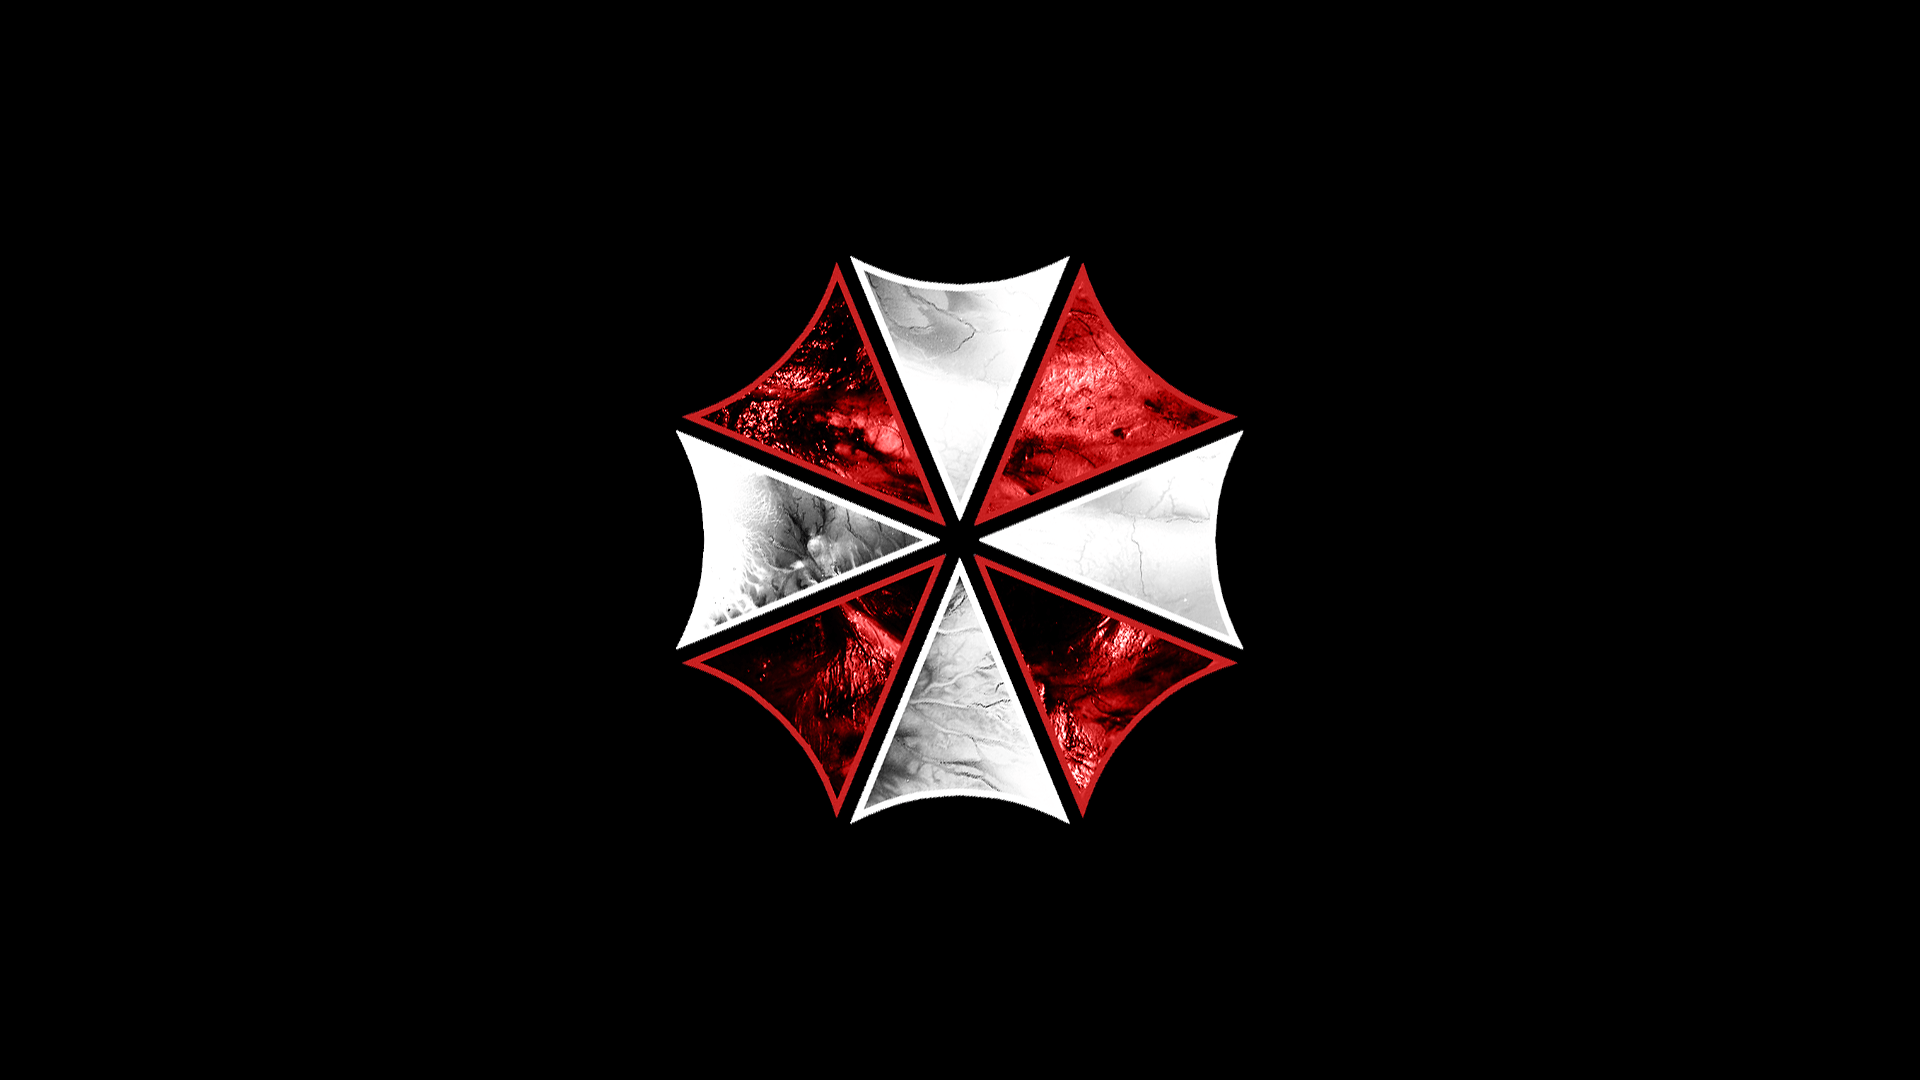 Umbrella Corp Logo - video games, movies, Resident Evil, Umbrella Corp., logos